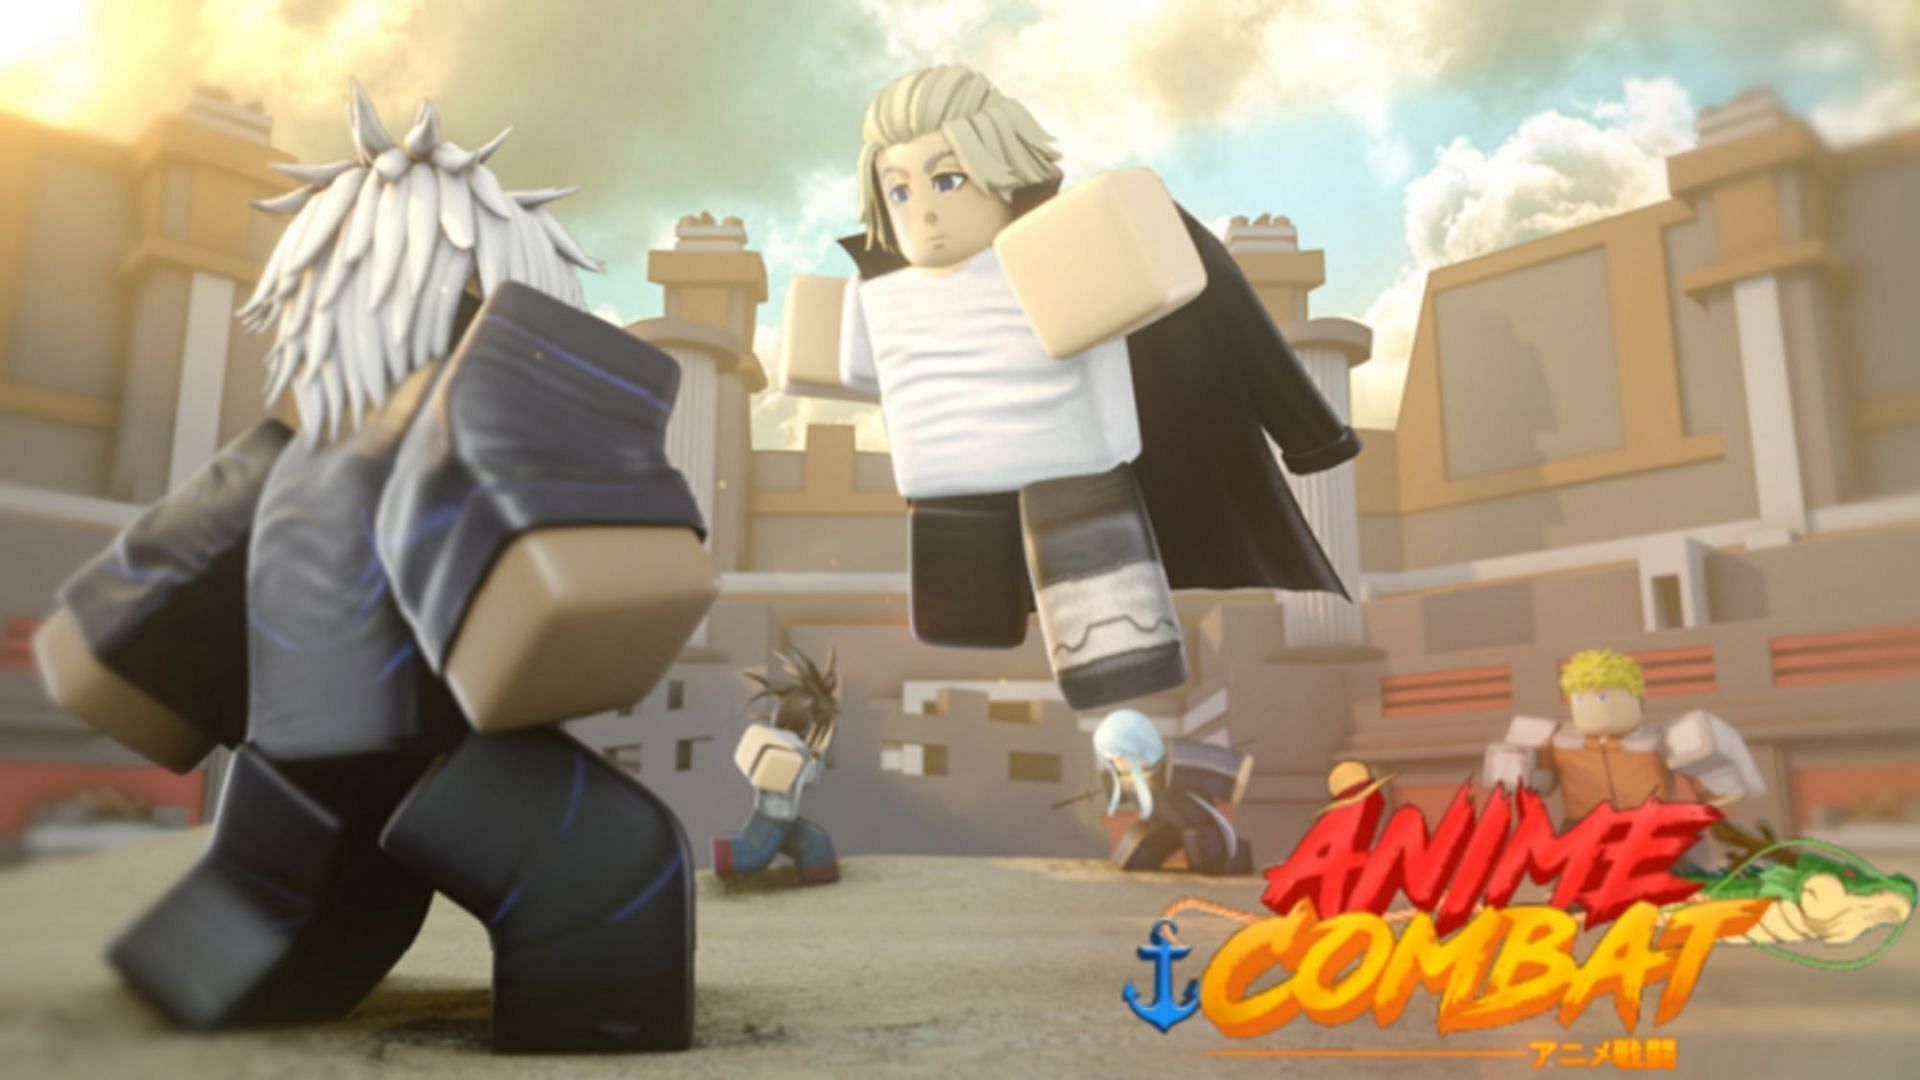 Anime Combat Simulator codes (Image via Sportskeeda)